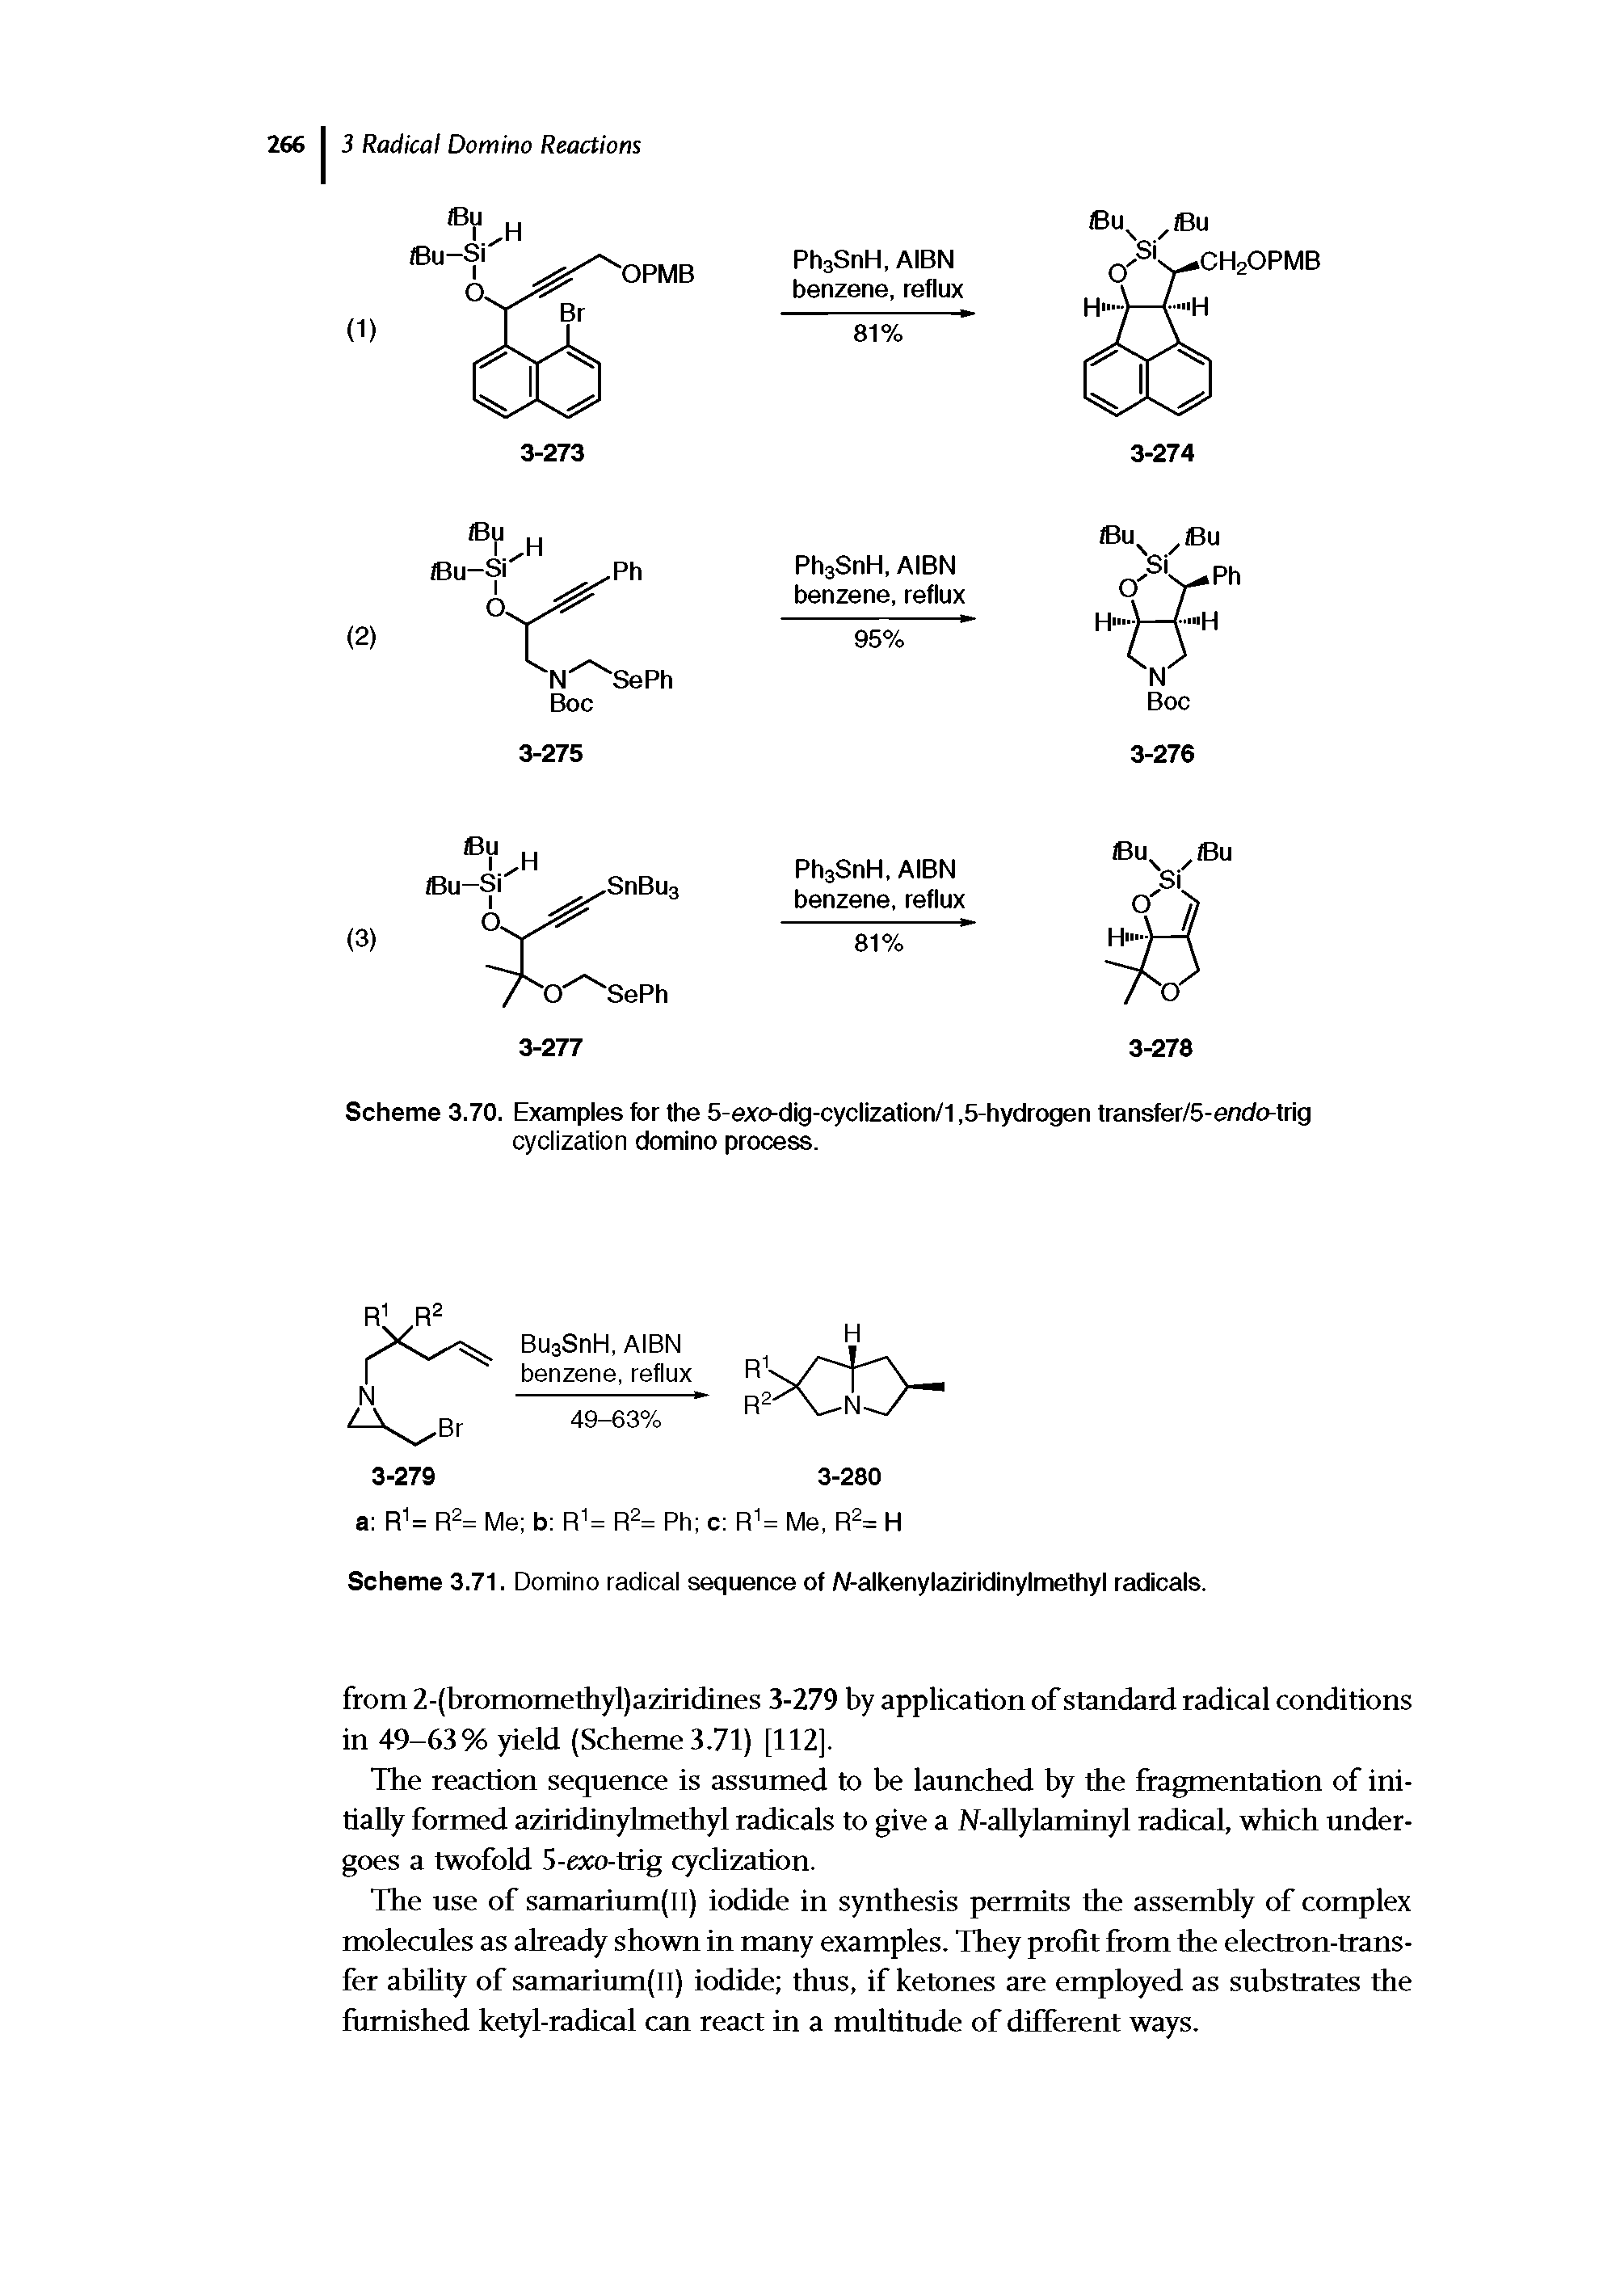 Scheme 3.71. Domino radical sequence of N-alkenylaziridinylmethyl radicals.